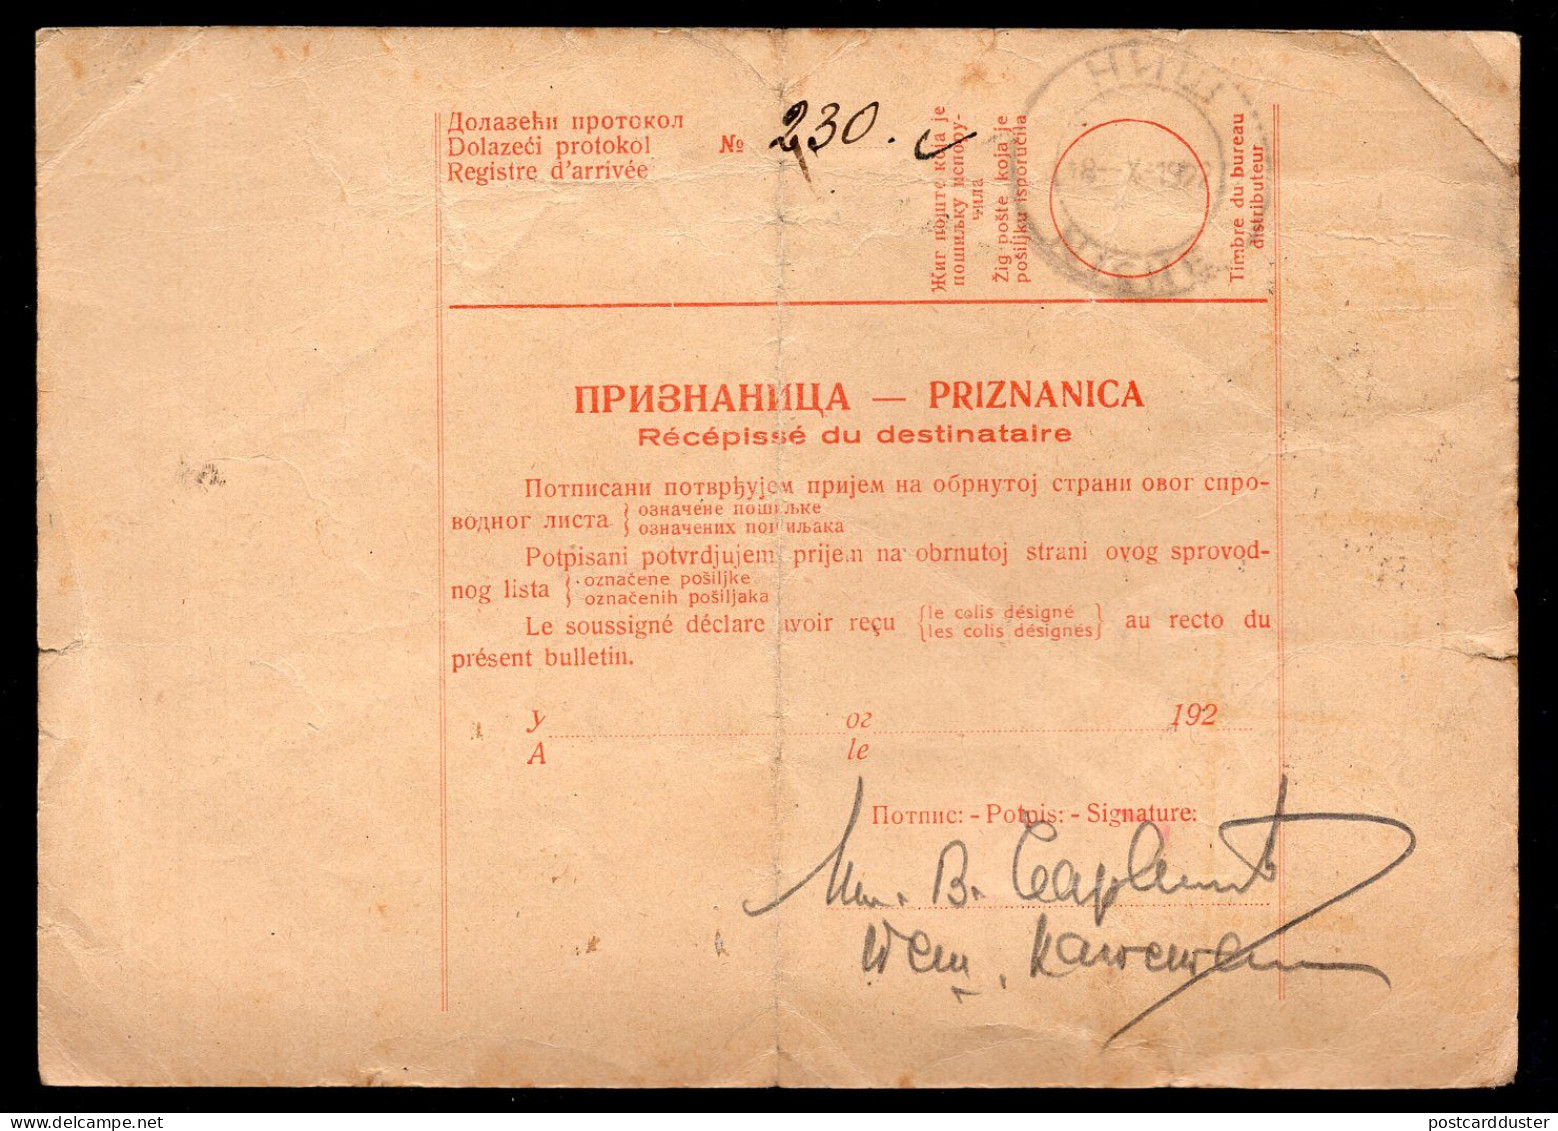 YUGOSLAVIA SHS Beograd Serbia 1922 Postal Parcel Card (p628) - Covers & Documents